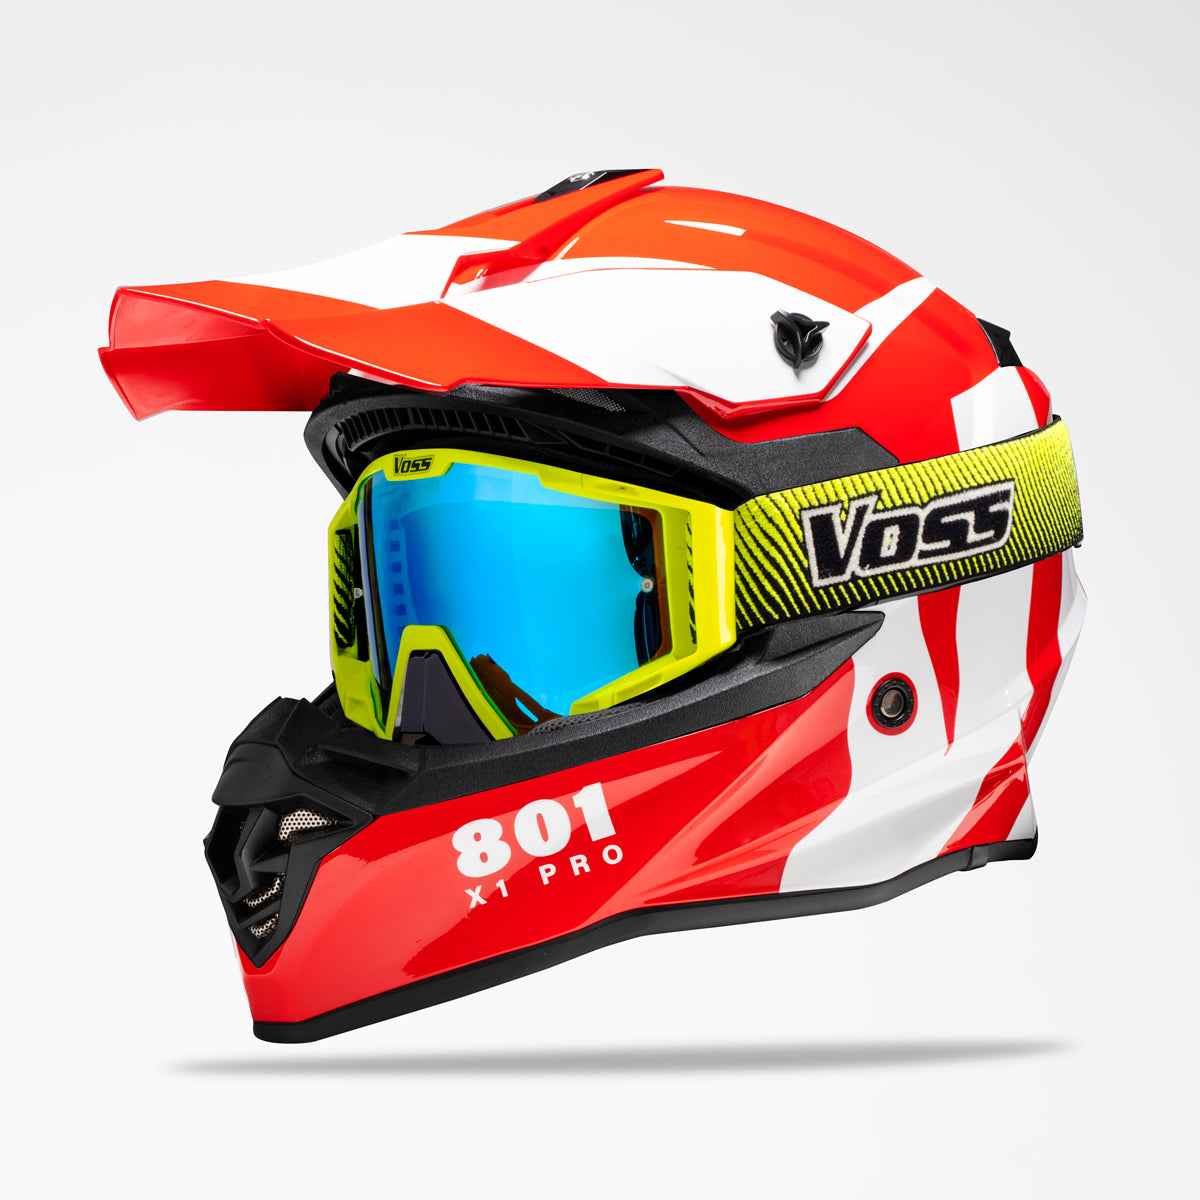 VOSS 801 X1 PRO DIRT RED/ WHITE WAVY HELMET - Voss Helmets